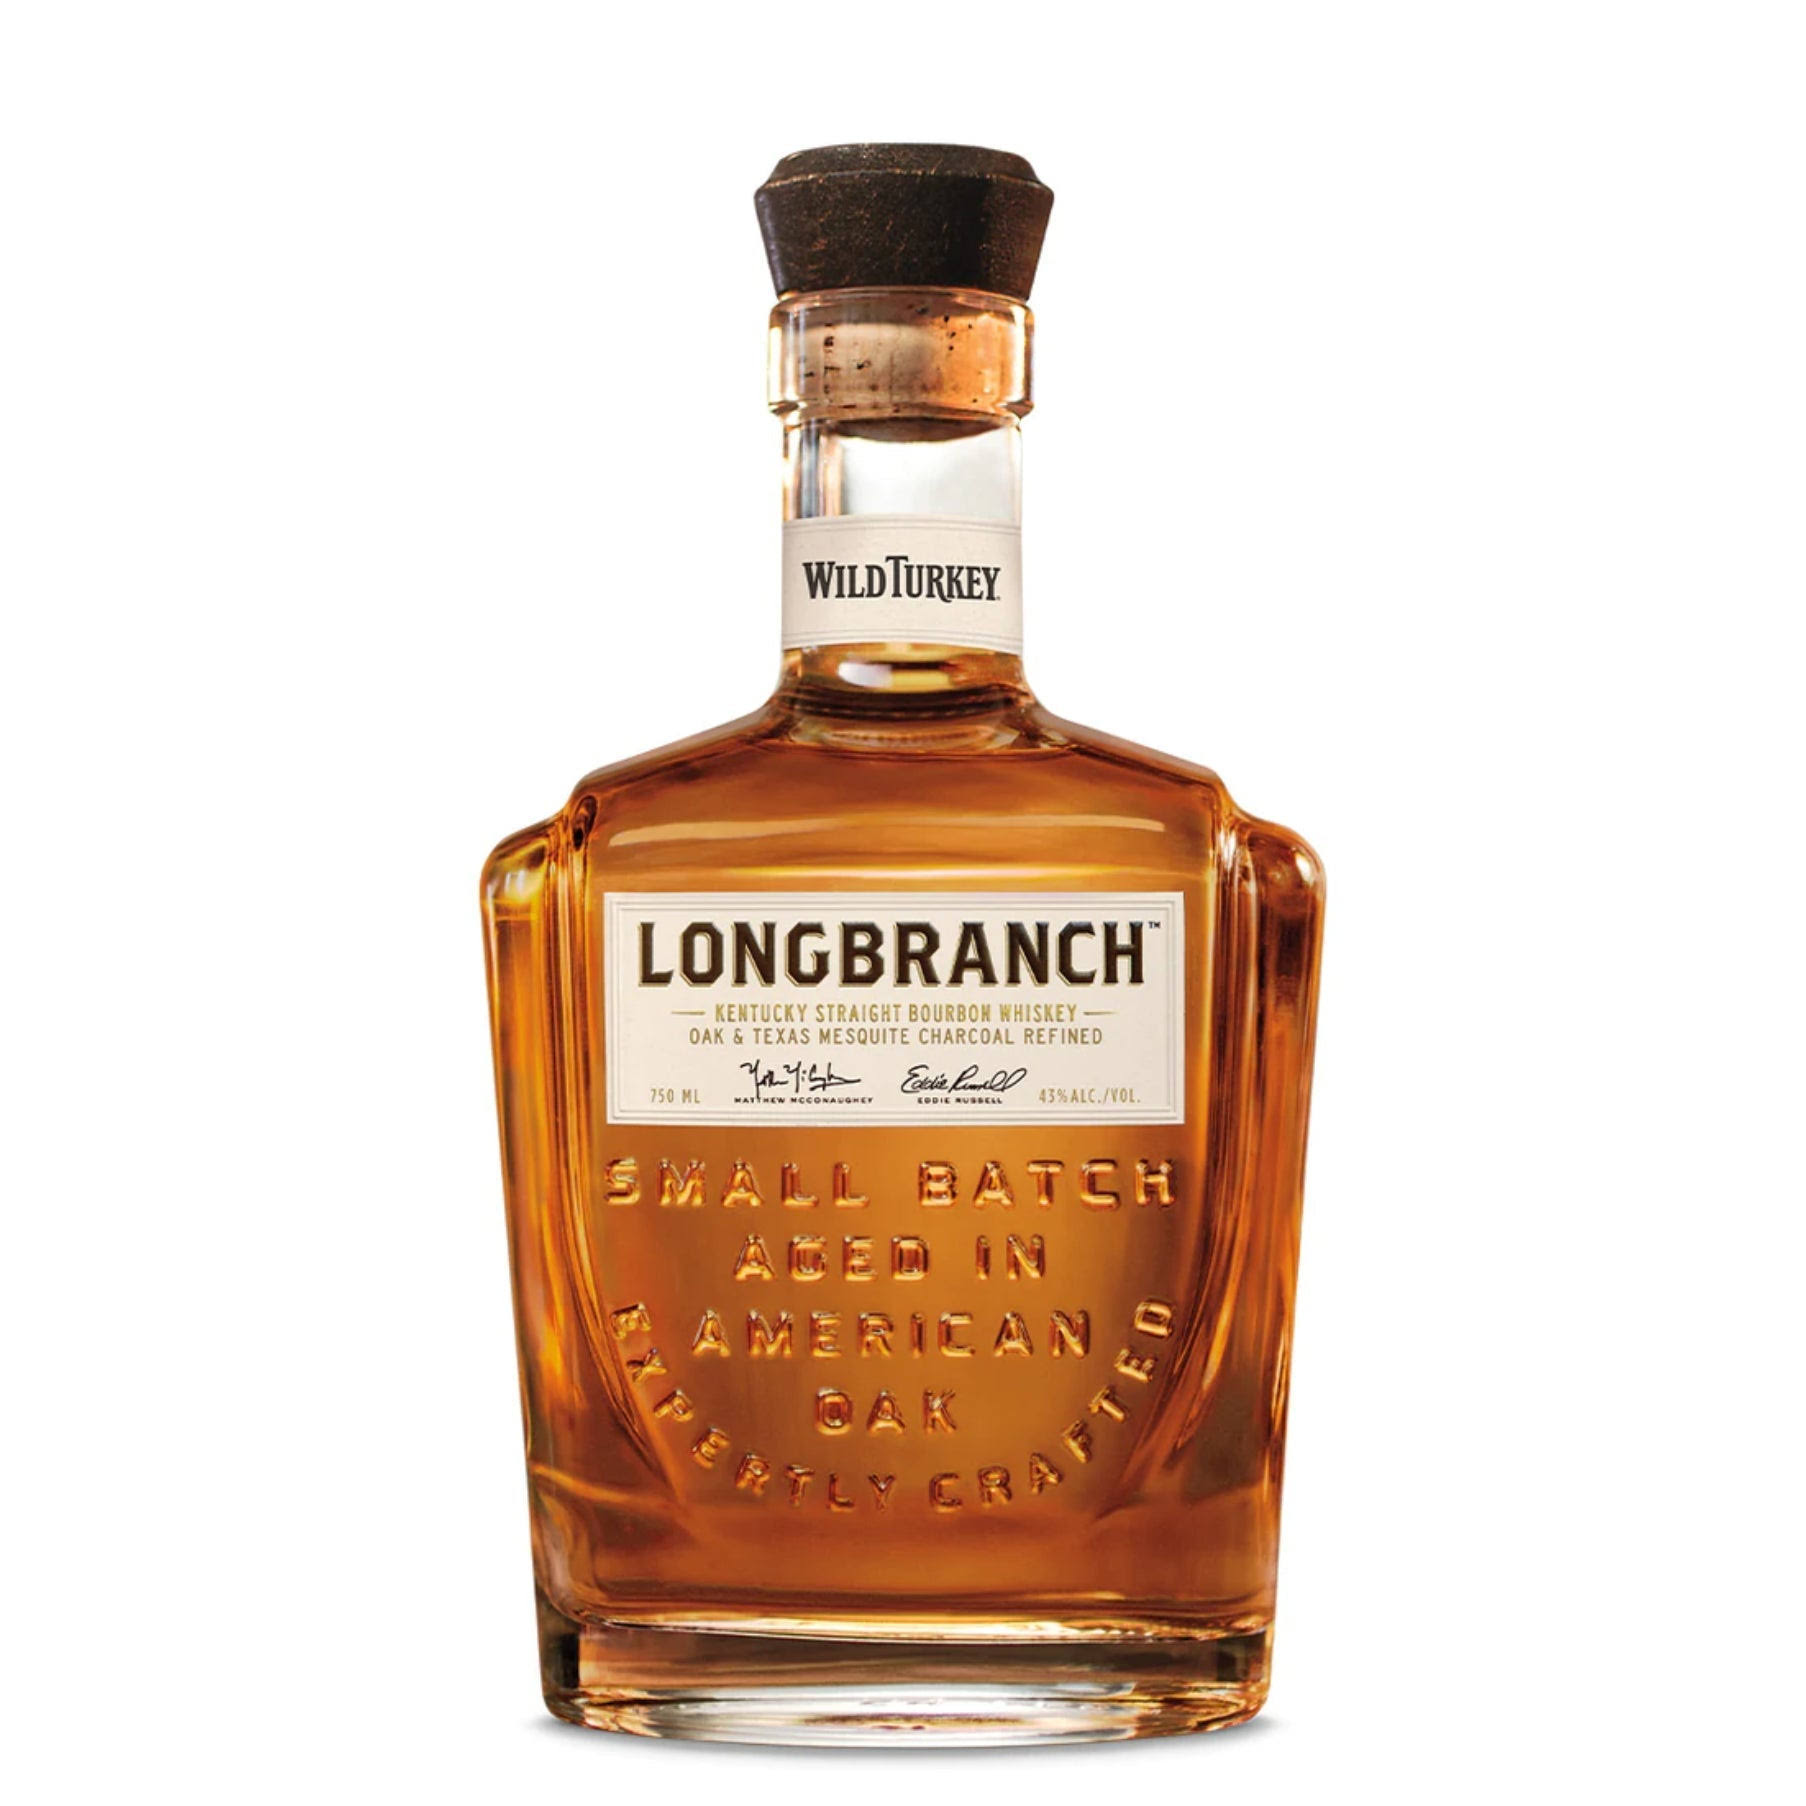 Wild Turkey LongBranch Bourbon Whiskey, Kentucky Straight - 750 ml